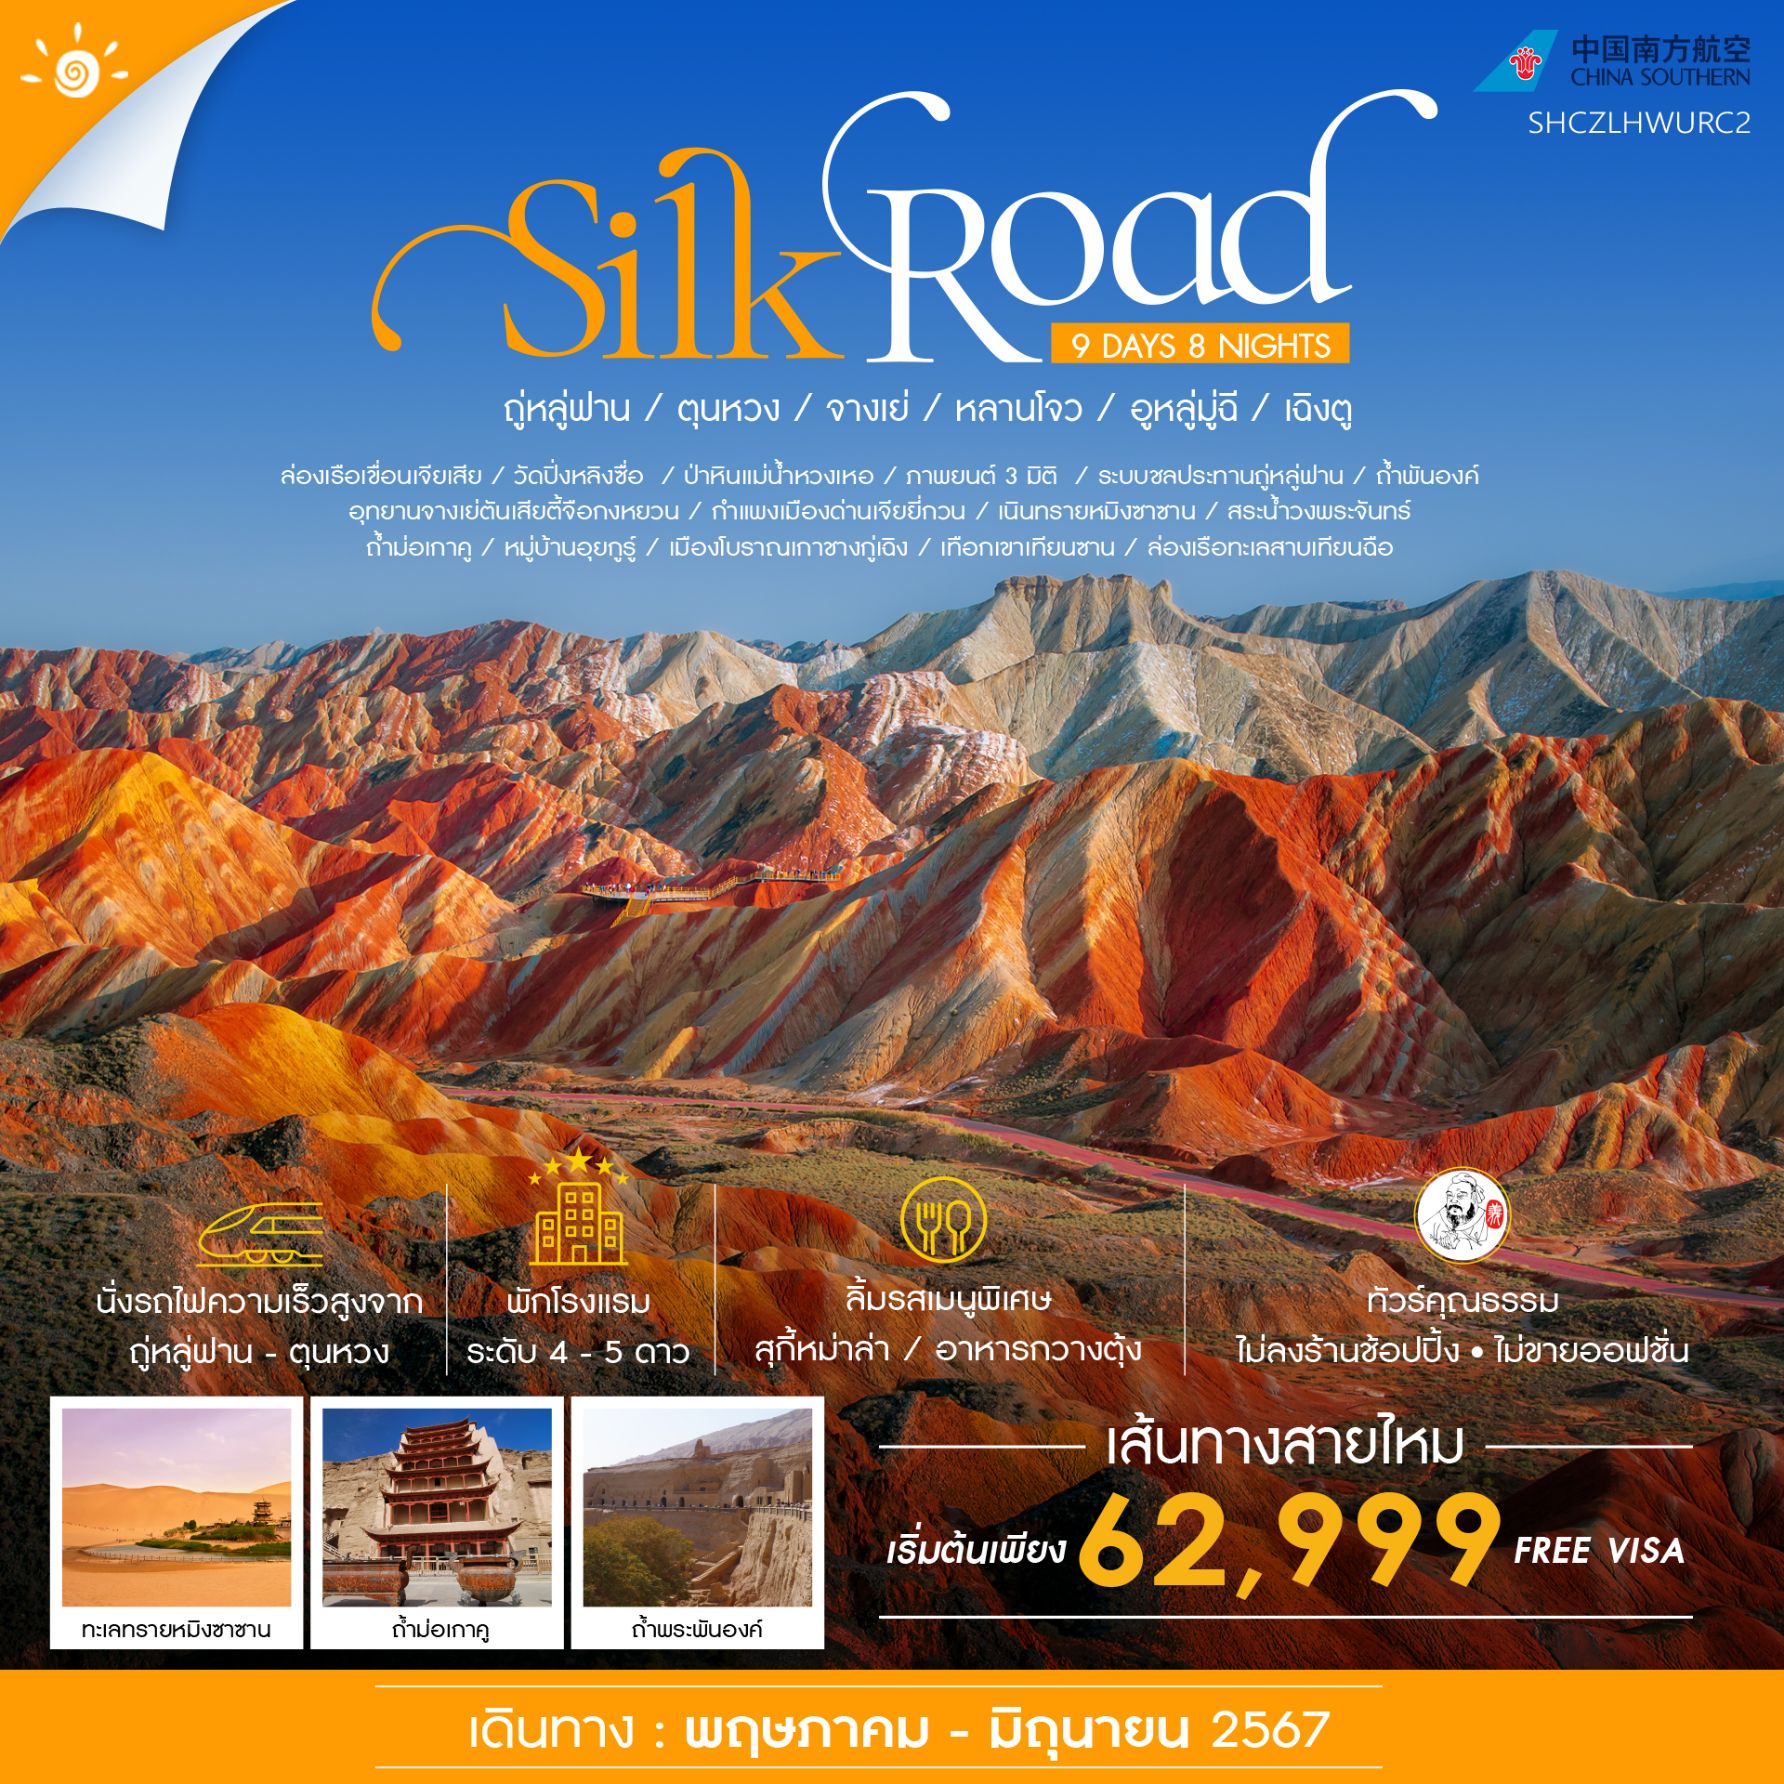 Silk Road ถุ่หลู่ฟาน ตุนหวง จางเย่ หลานโจว อูหลู่มู่ฉี เฉิงตู 9 วัน 8 คืน เดินทาง พฤษภาคม 67 ราคา 62,999.- China Southern Airlines (CZ)